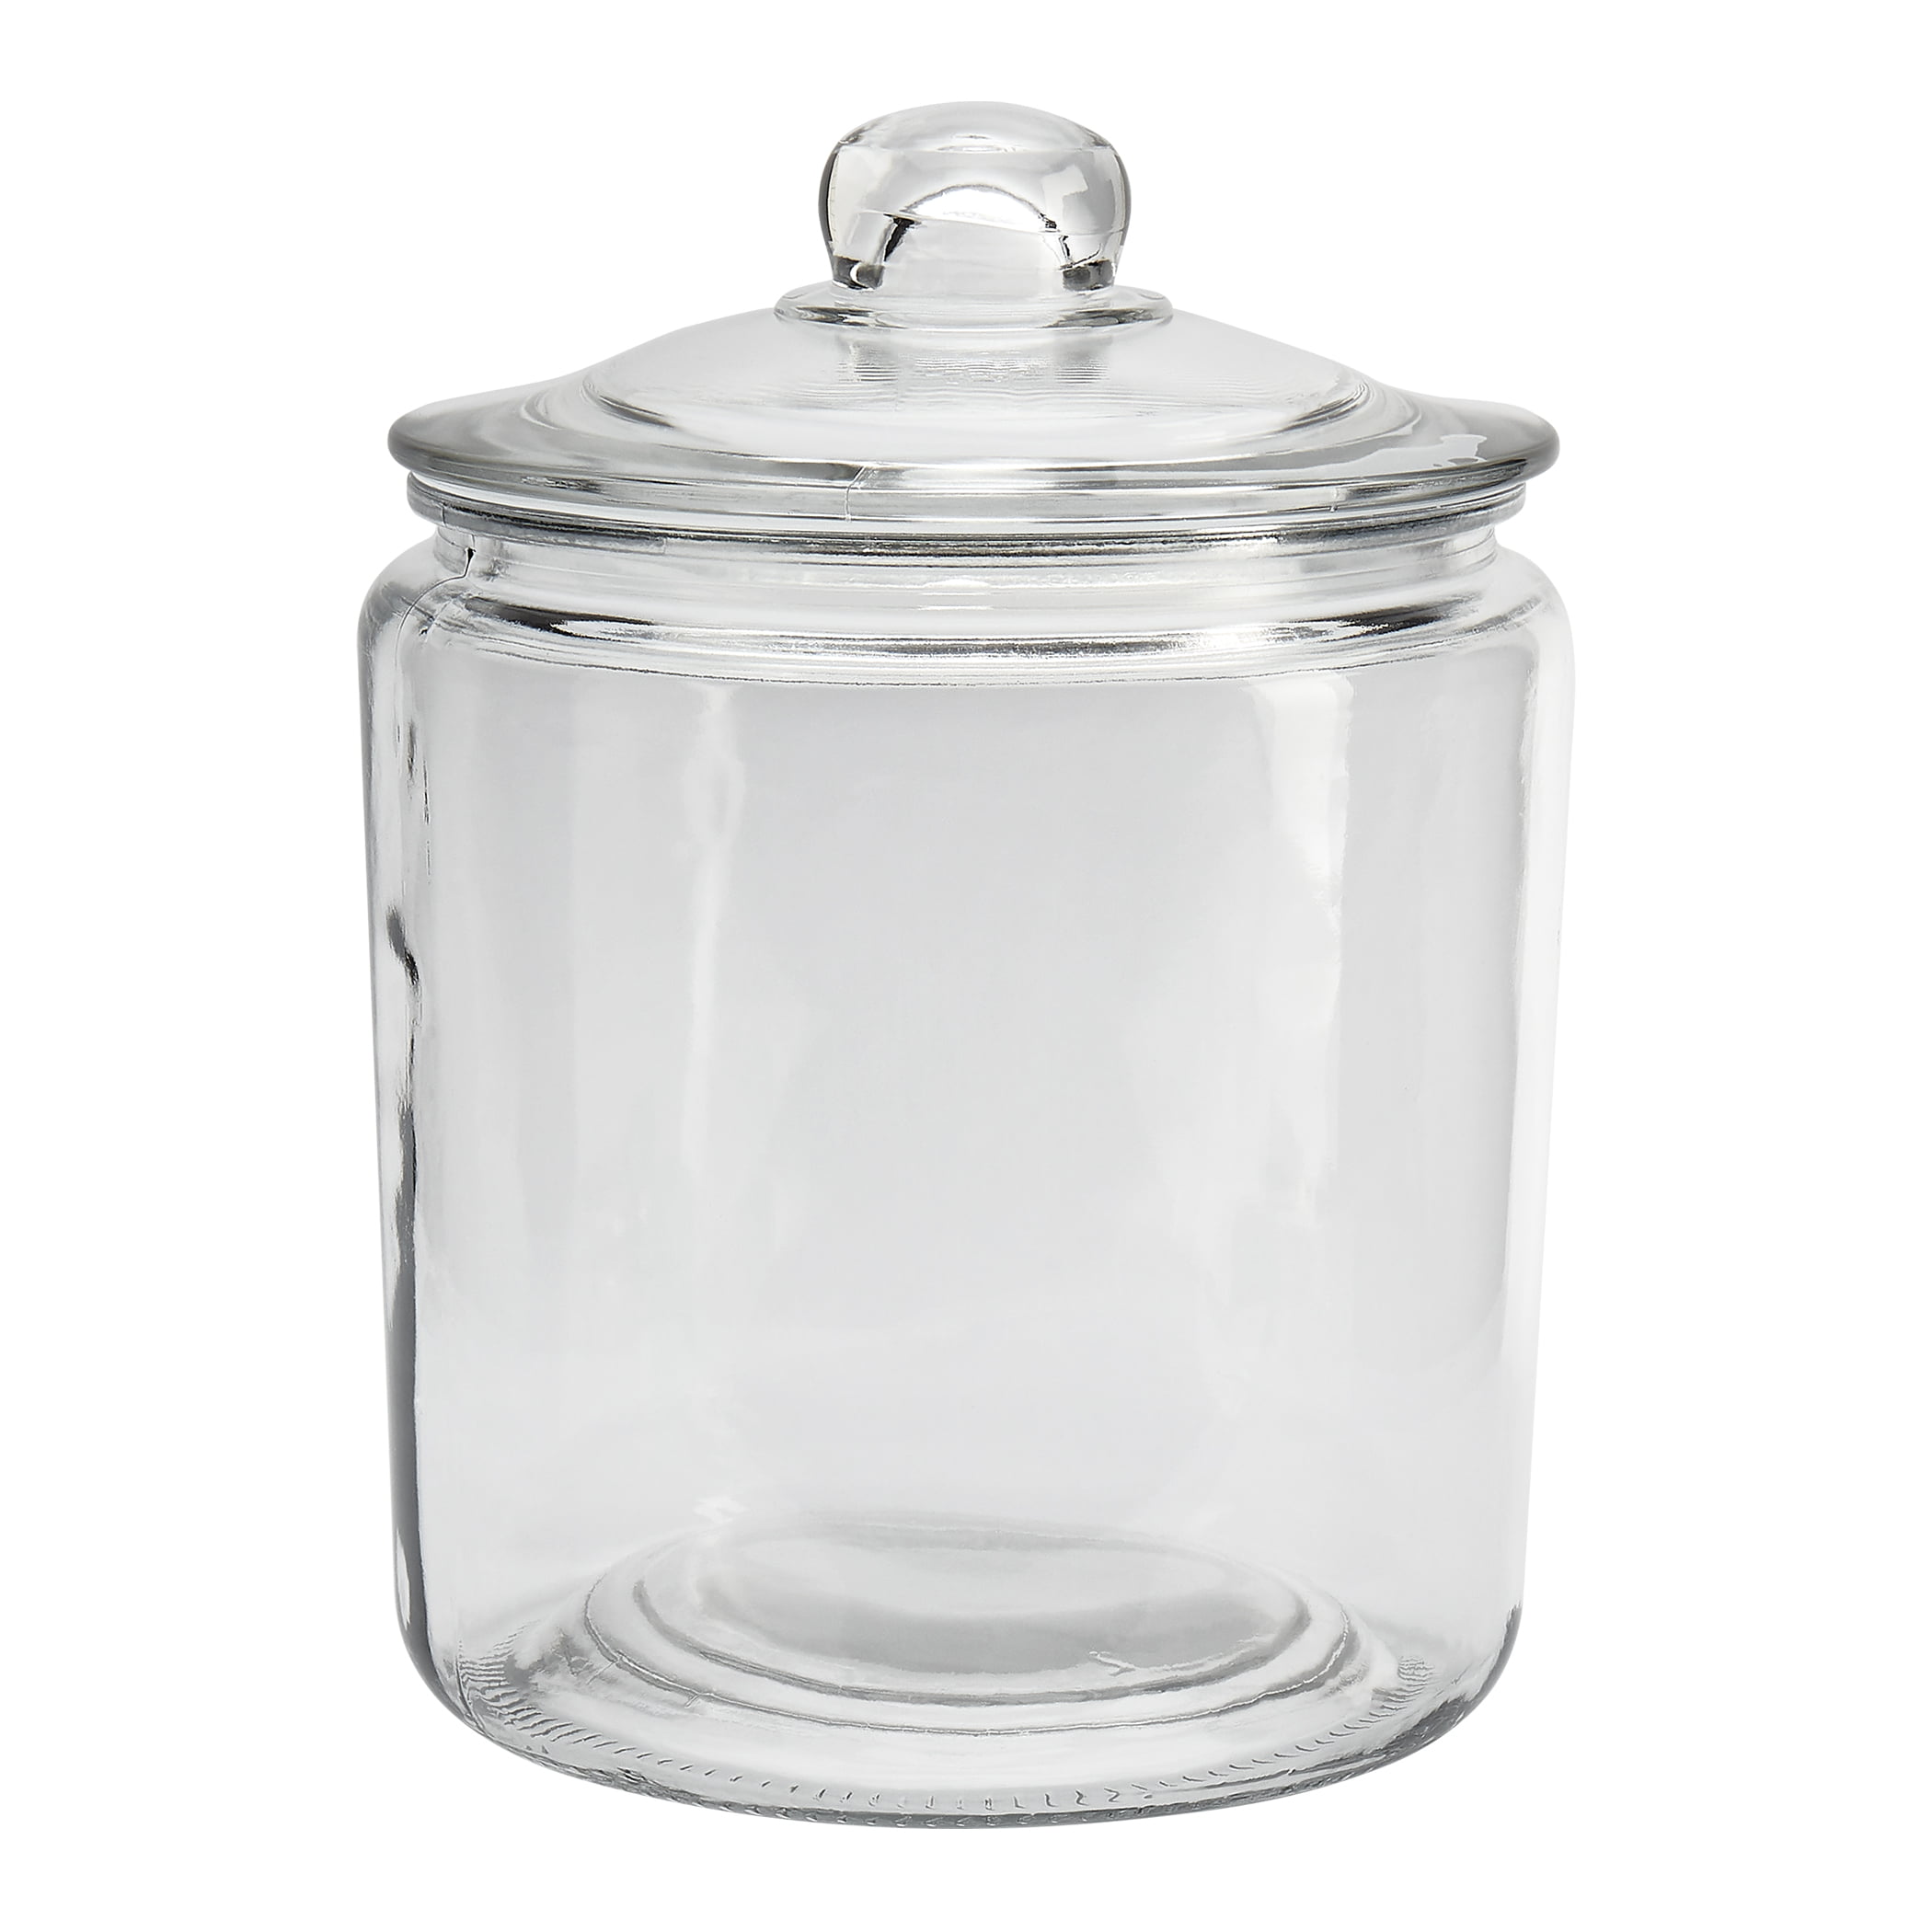 4 Piece Kitchen Glass Apothecary Jar Set Canora Grey